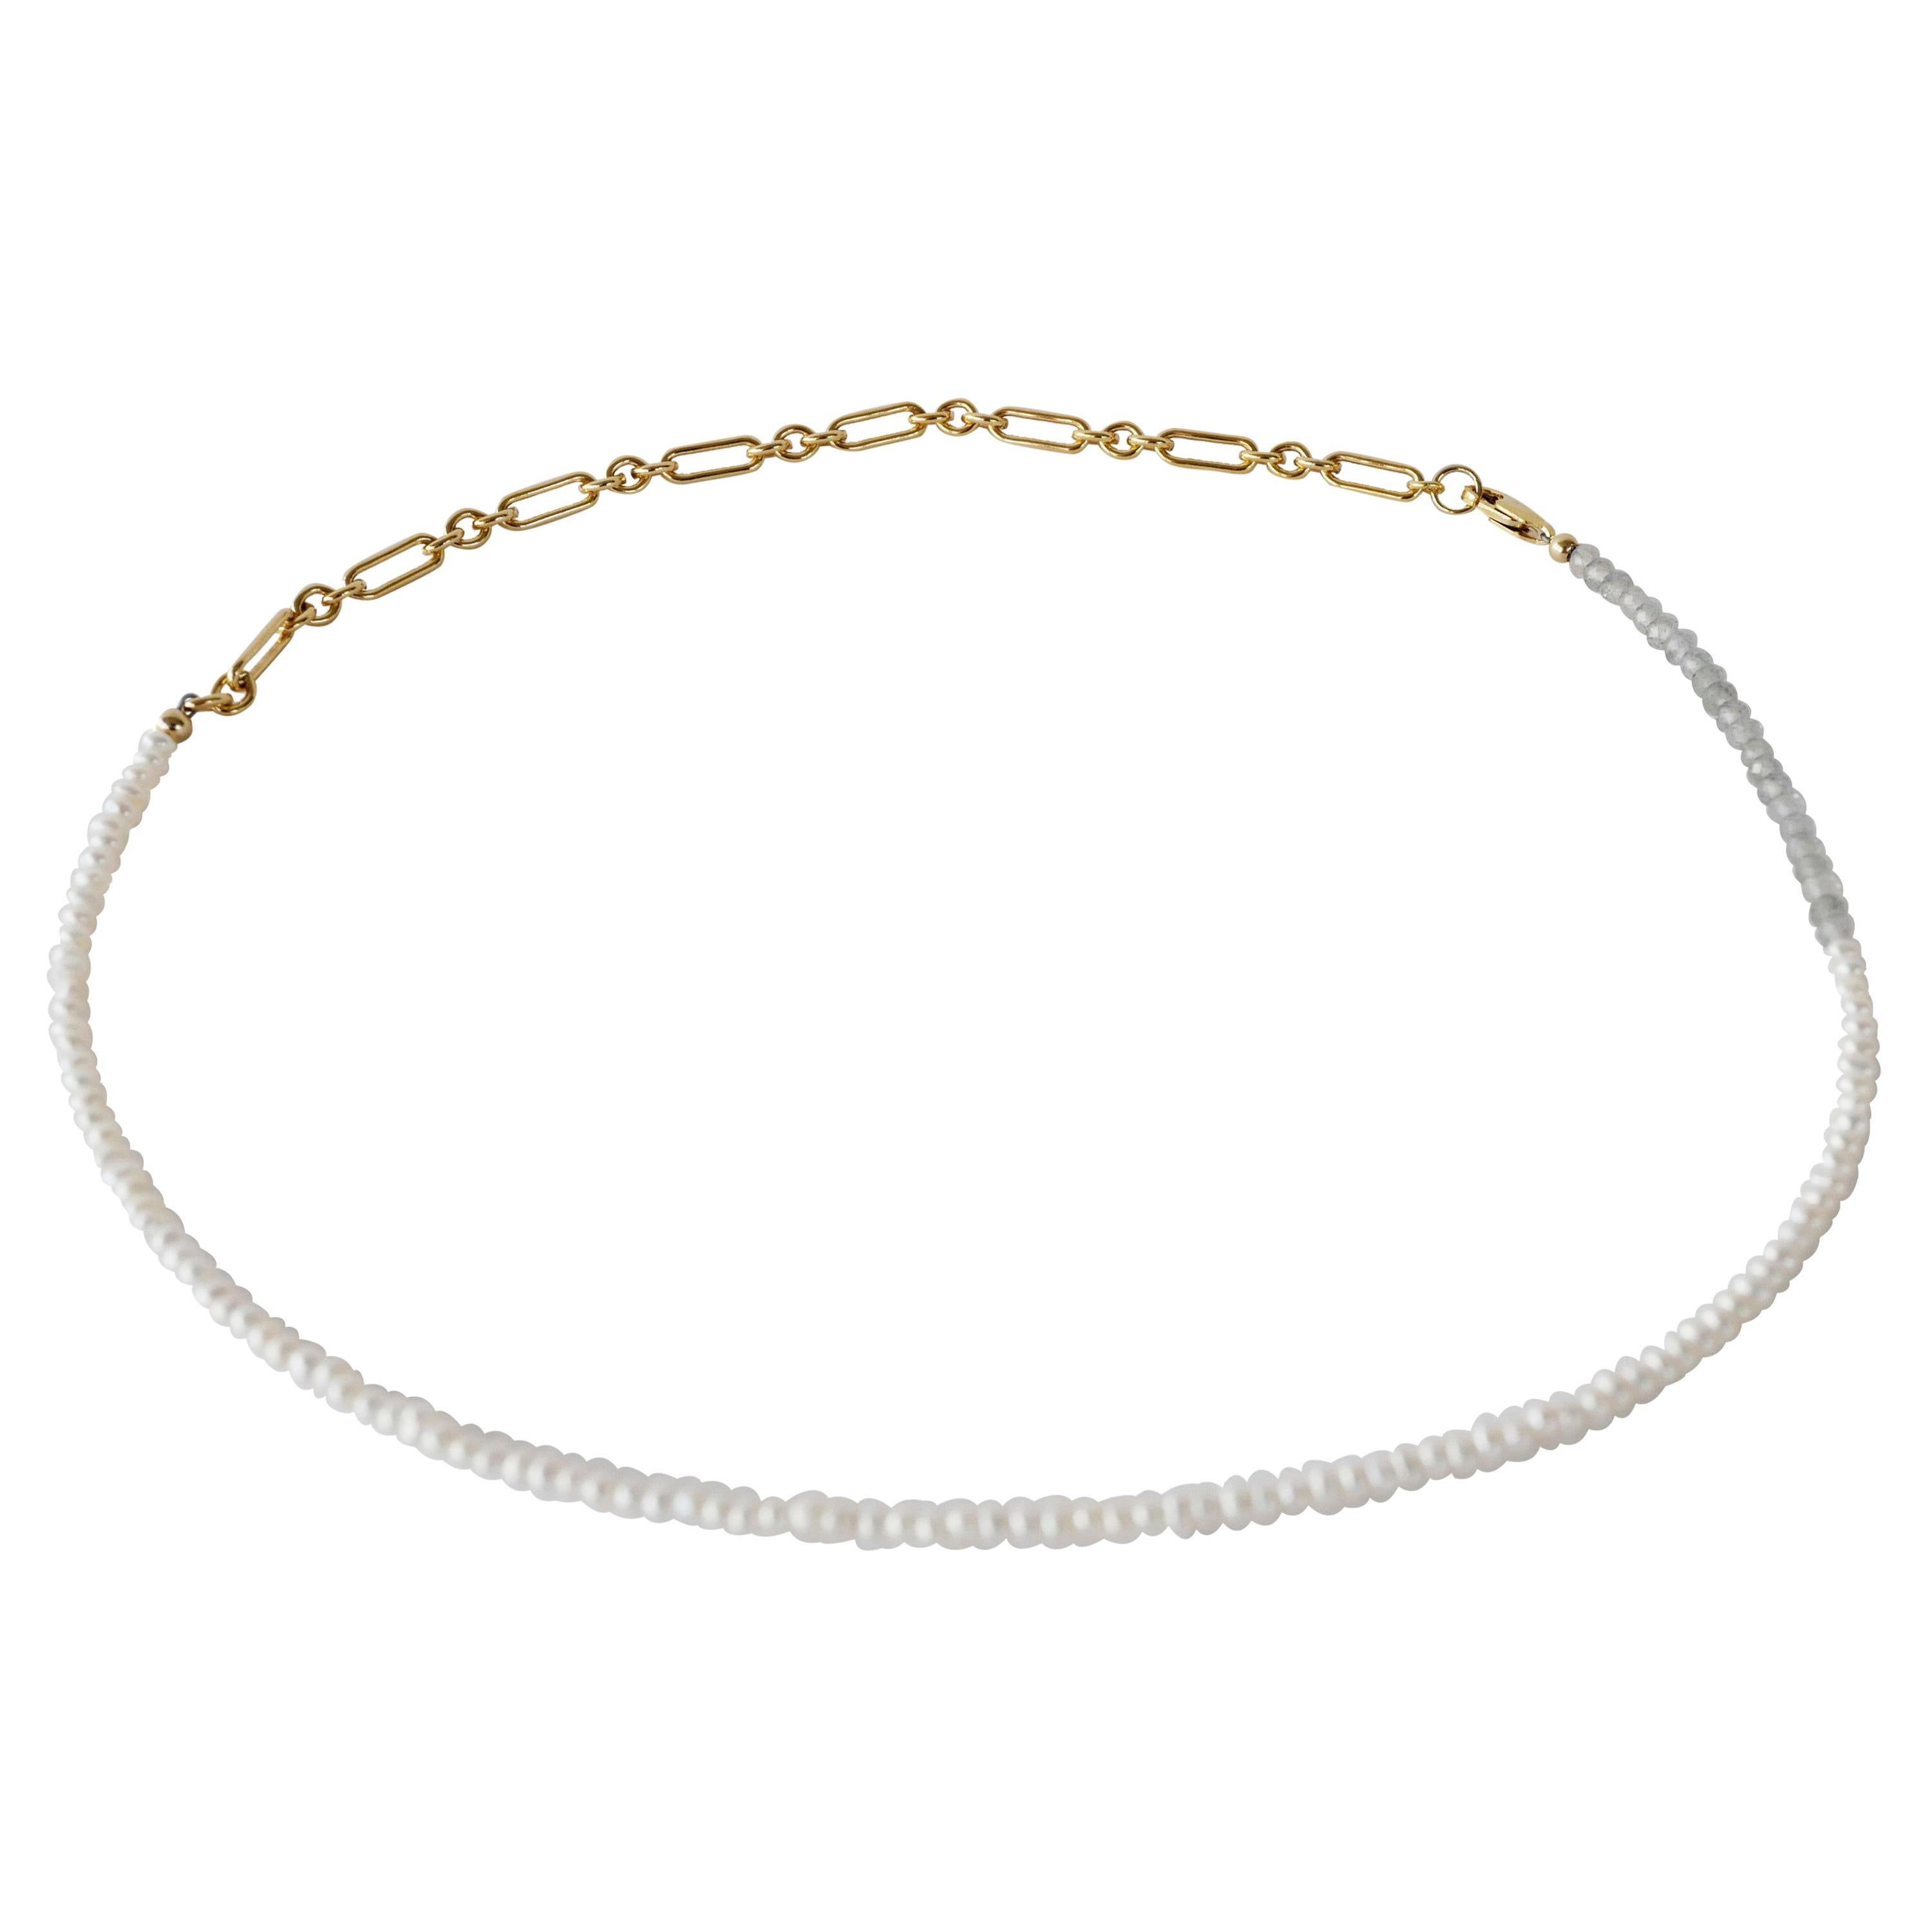 White Pearl Necklace labradorite Gold Tone Chain Beaded Choker J Dauphin